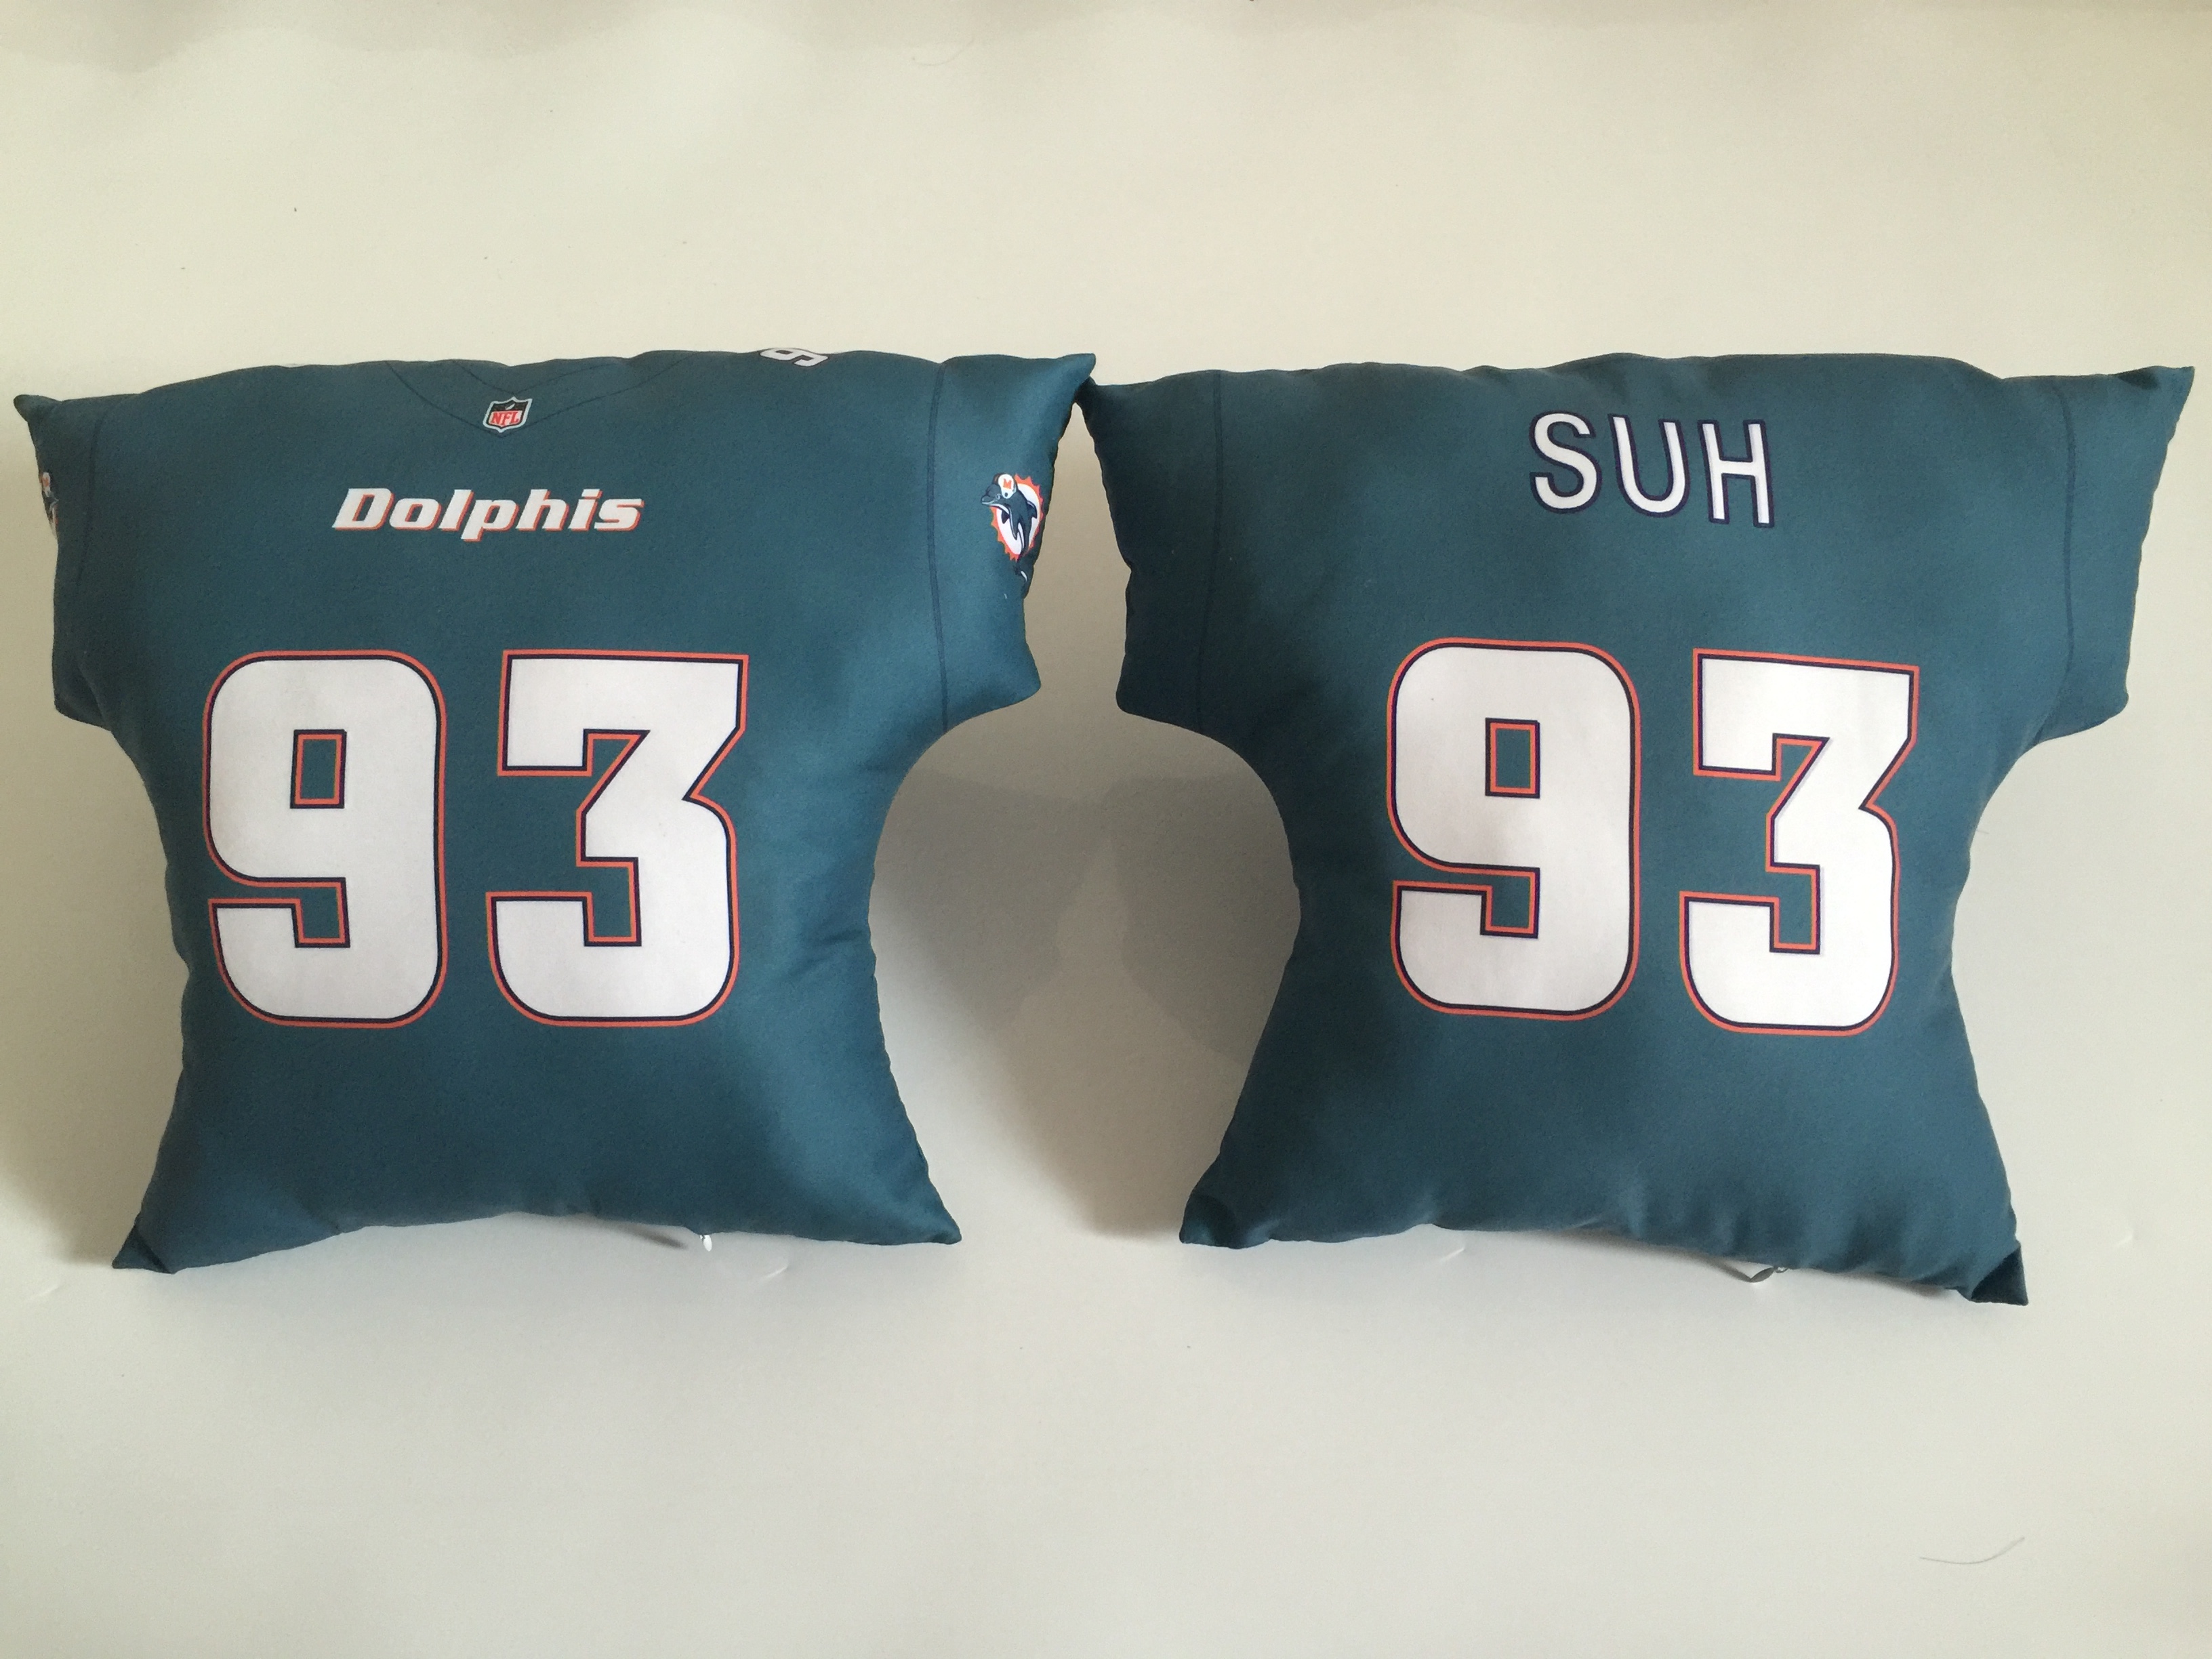 Miami Dolphins 93 Ndamukong Suh Aqua NFL Pillow